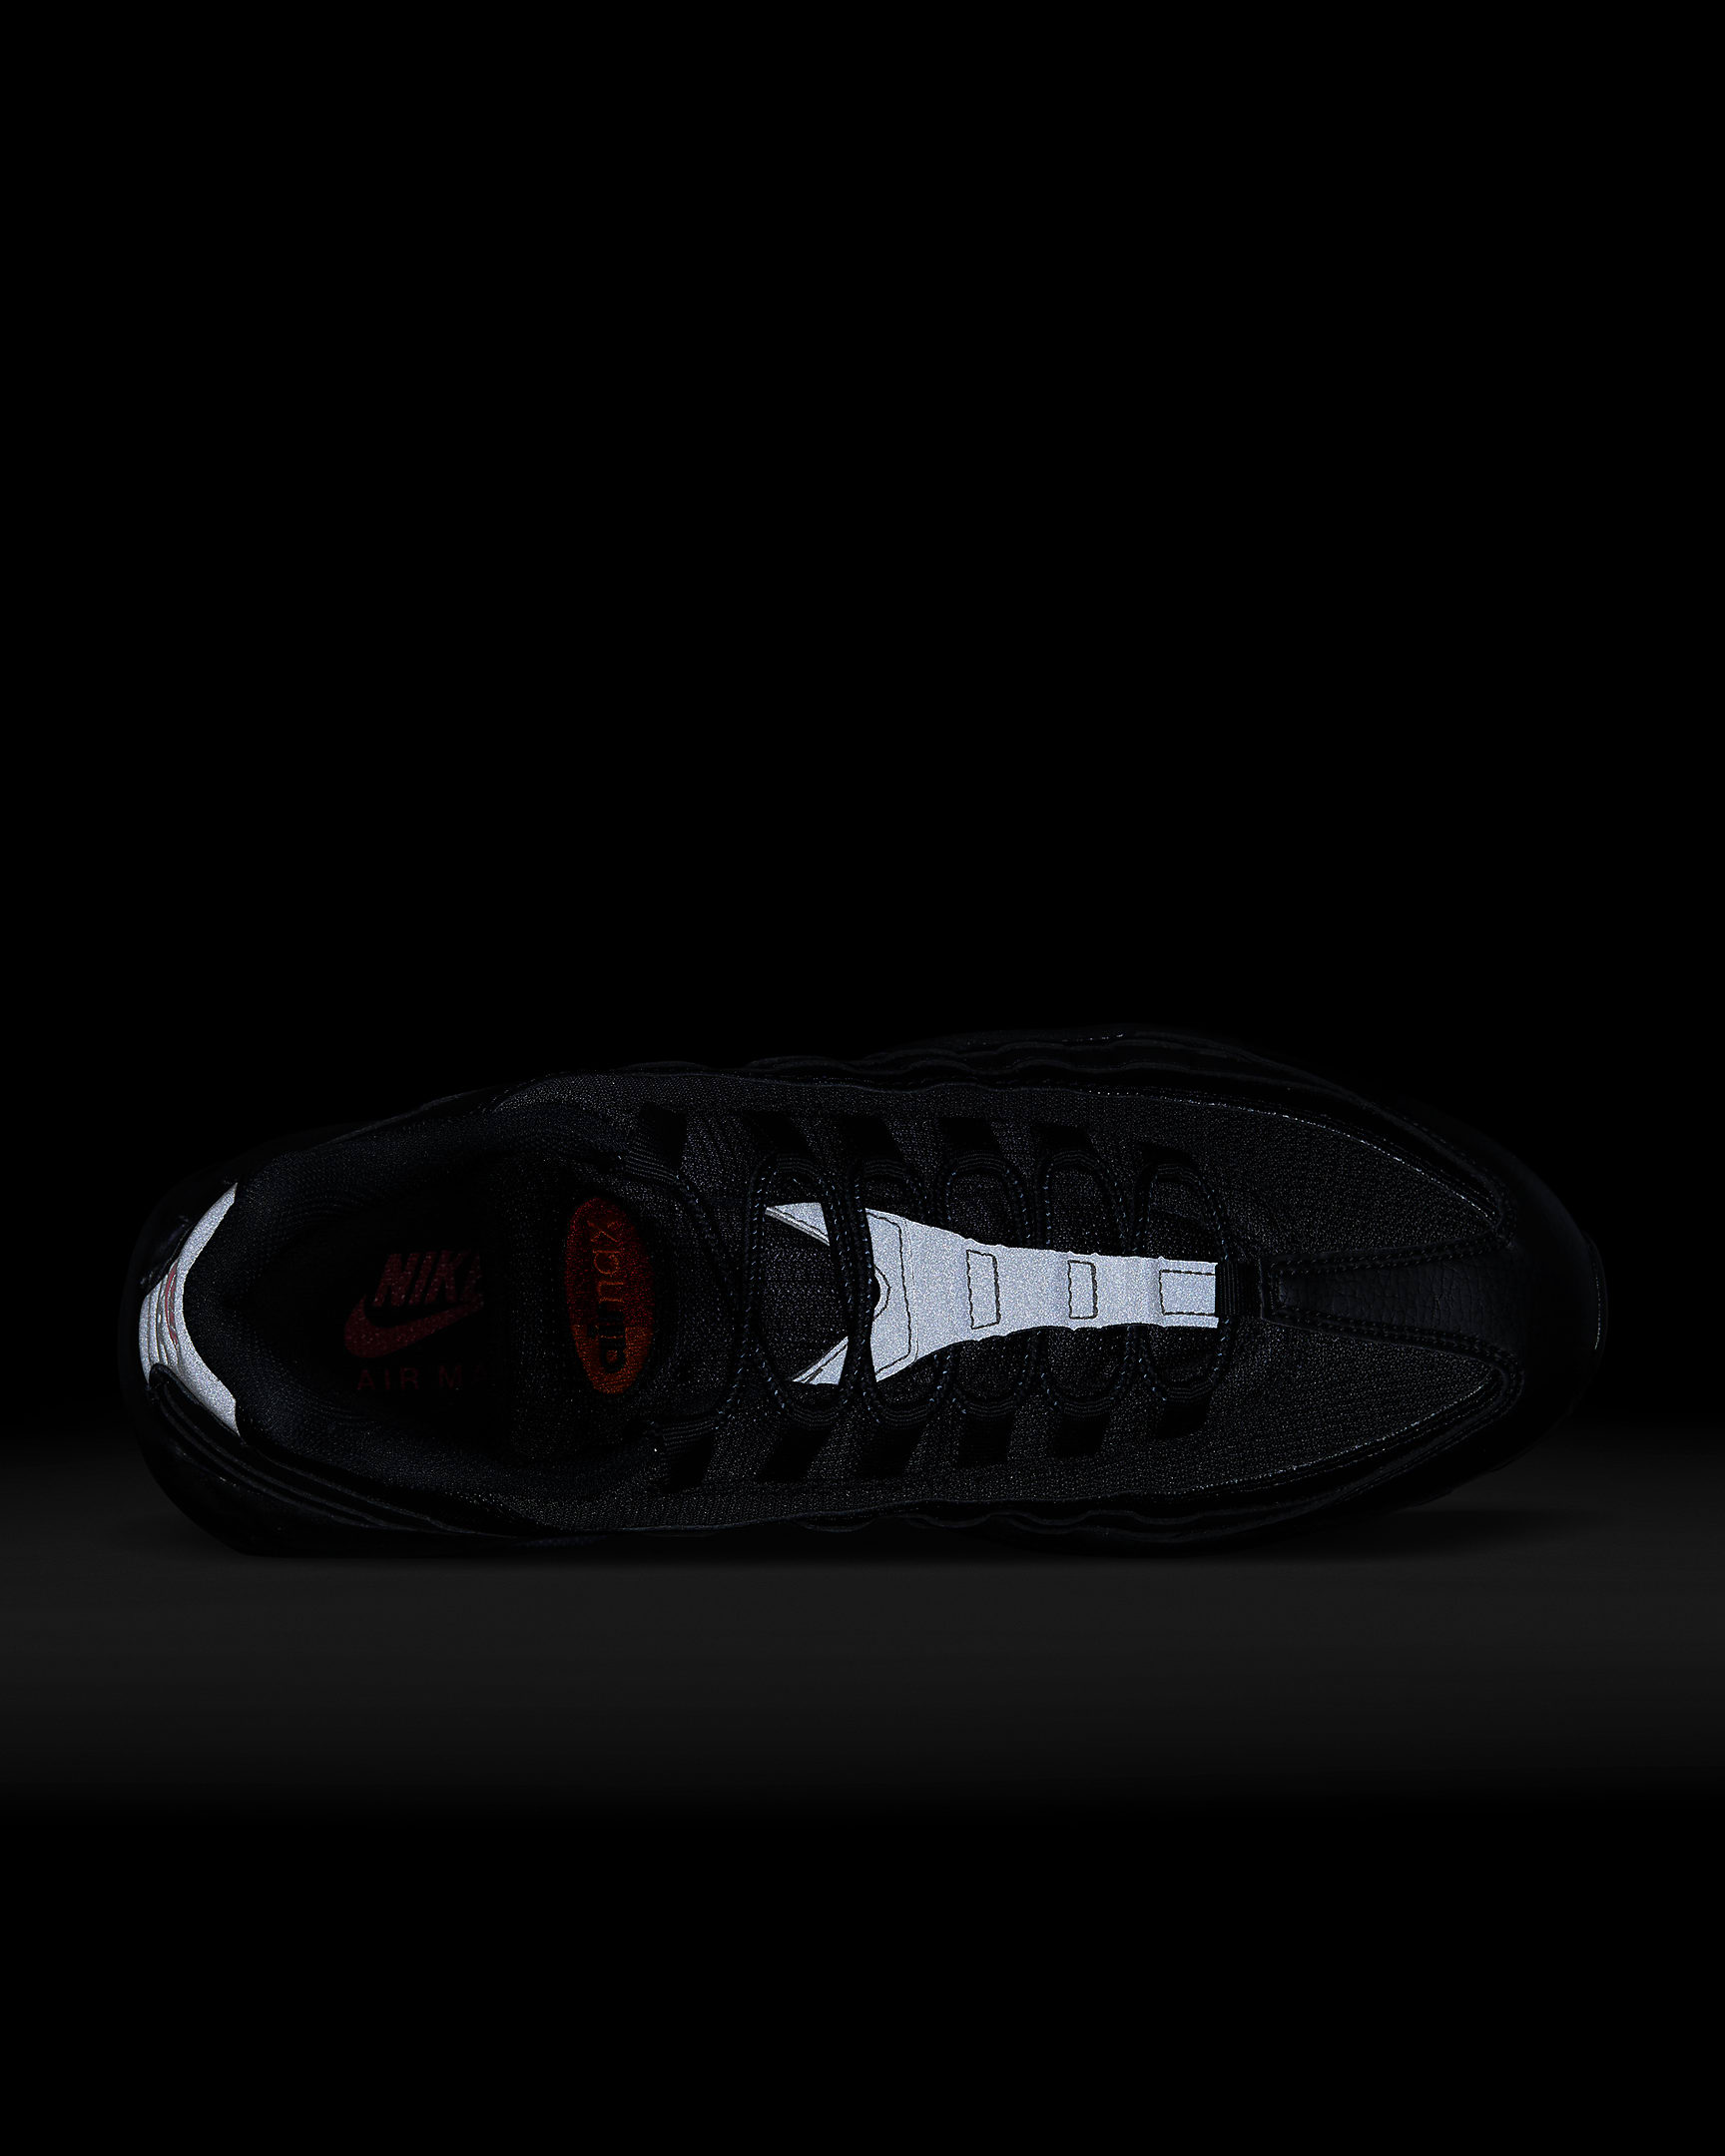 Nike Air Max 95 Men's Shoes - Black/Safety Orange/University Red